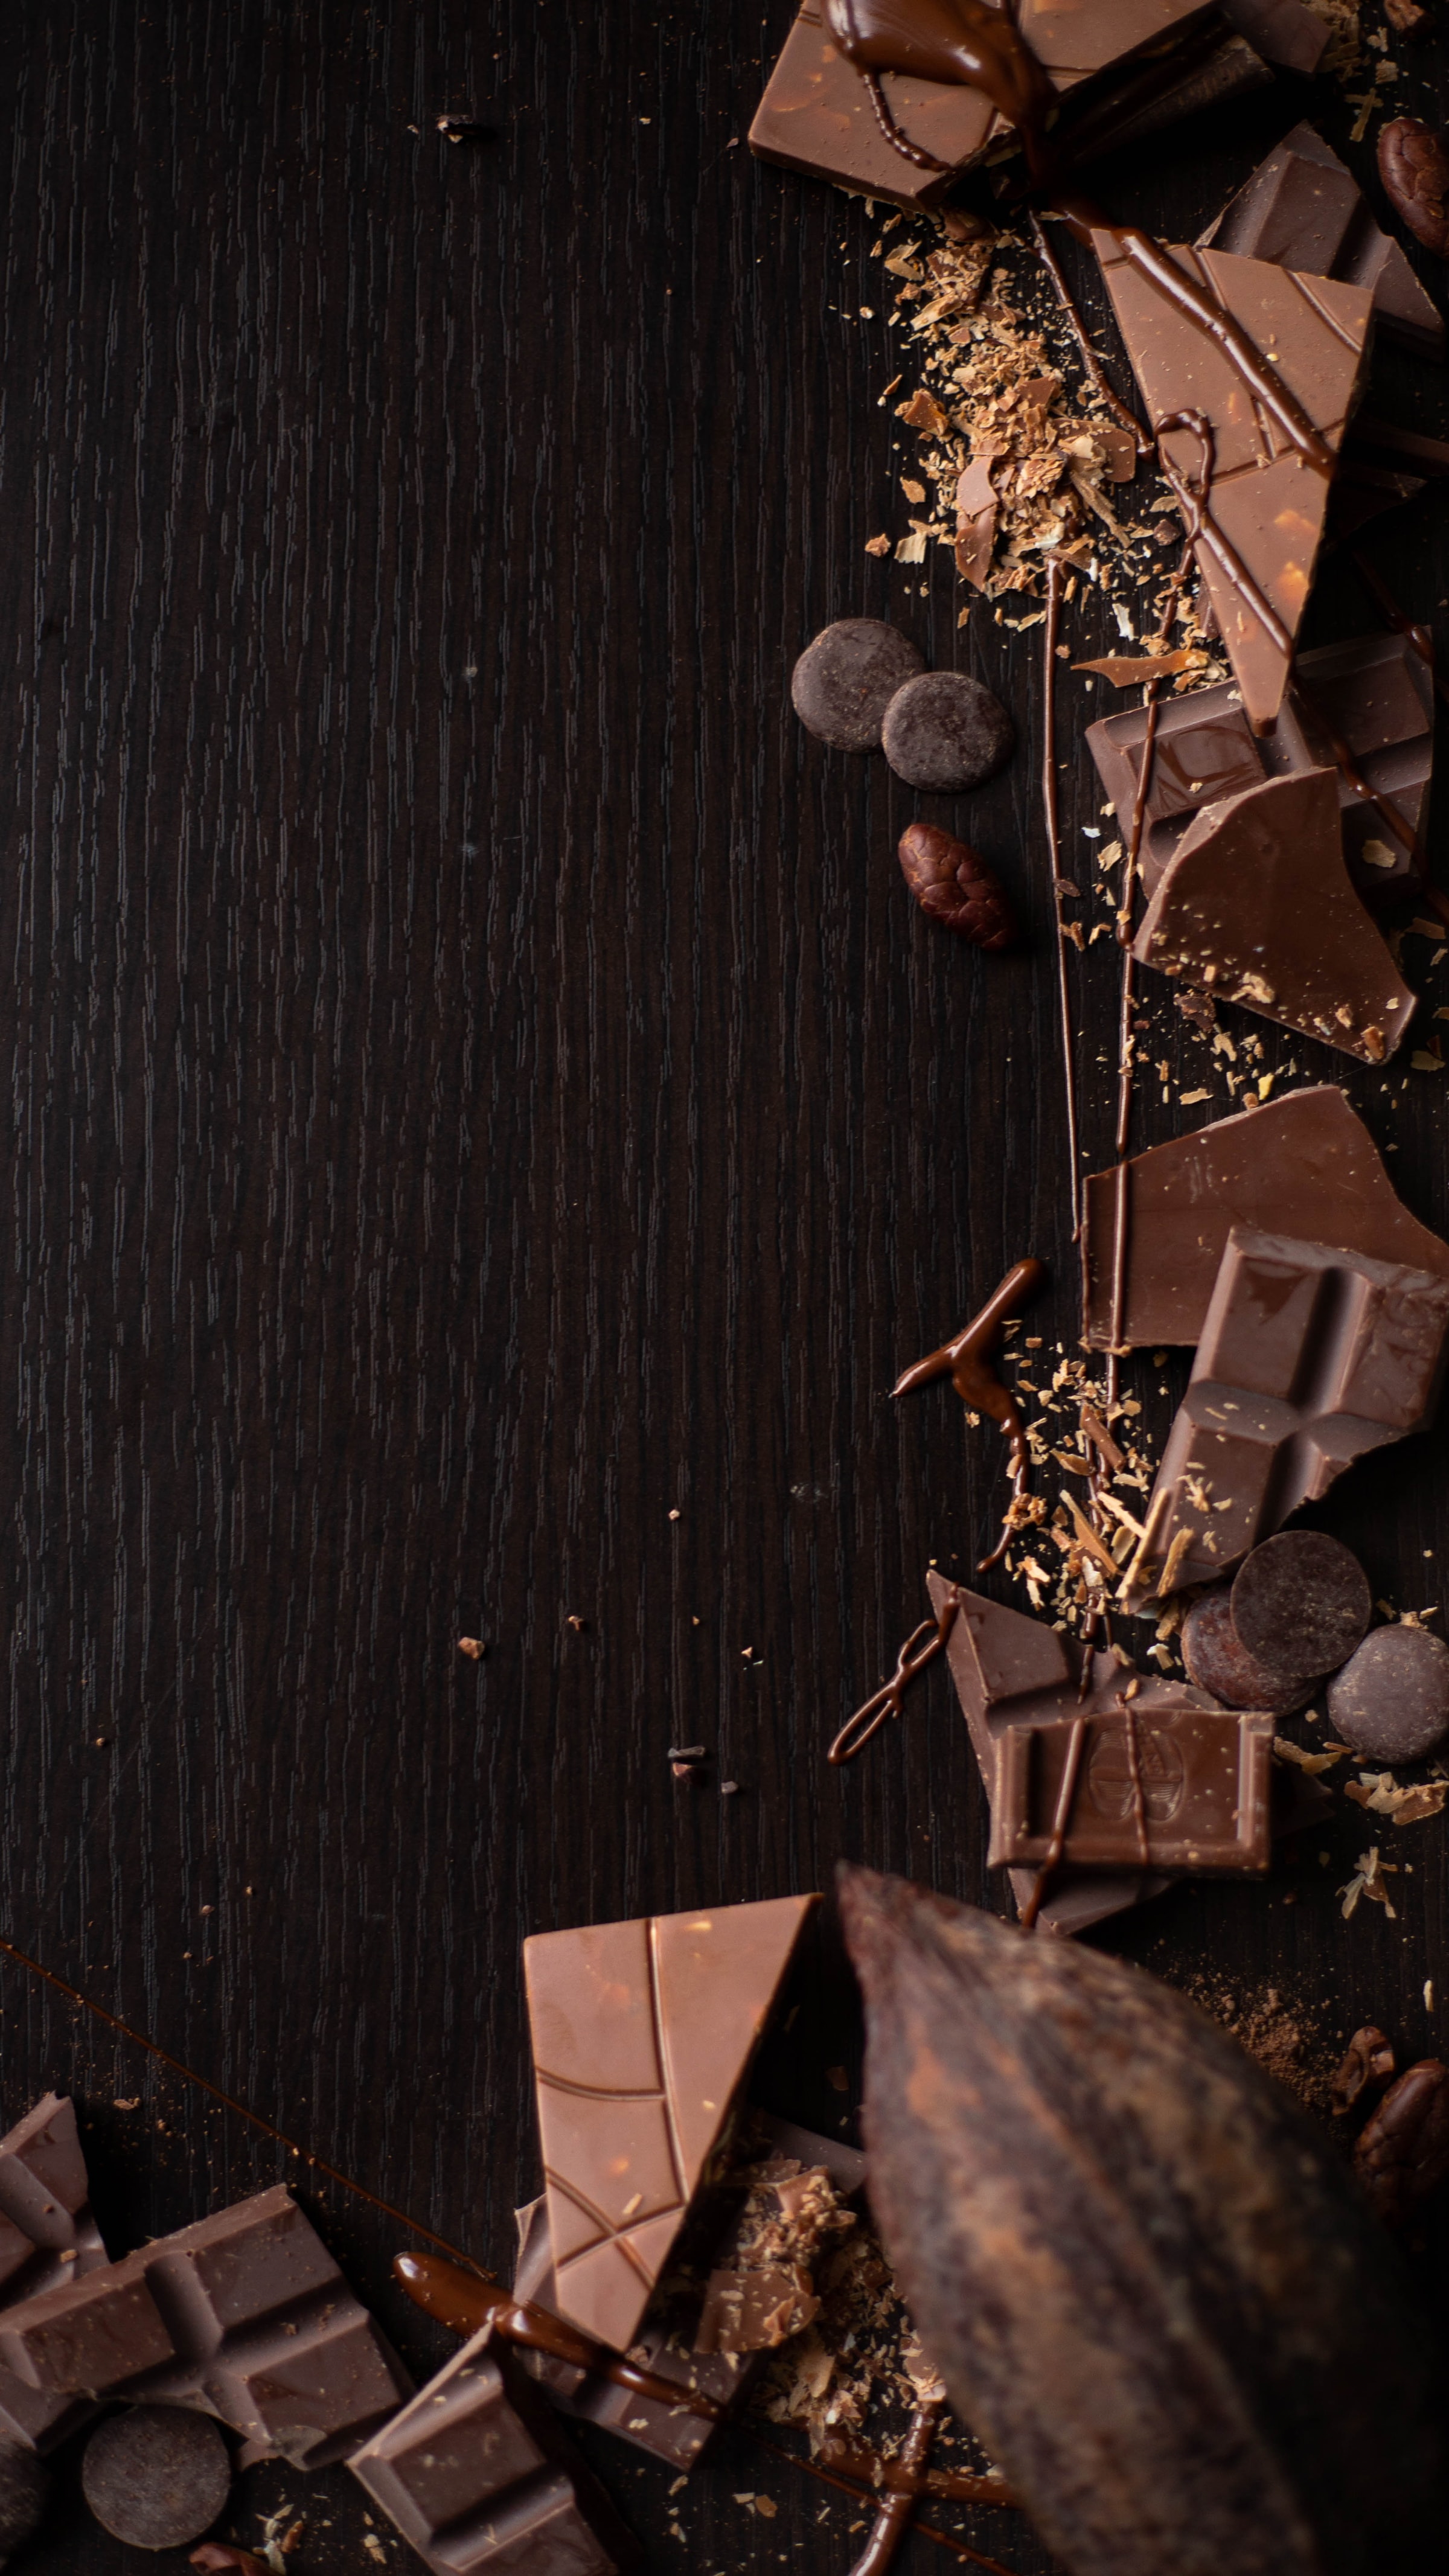 Chocolate wood, cocoa, chocolates, surface Free Stock Photos